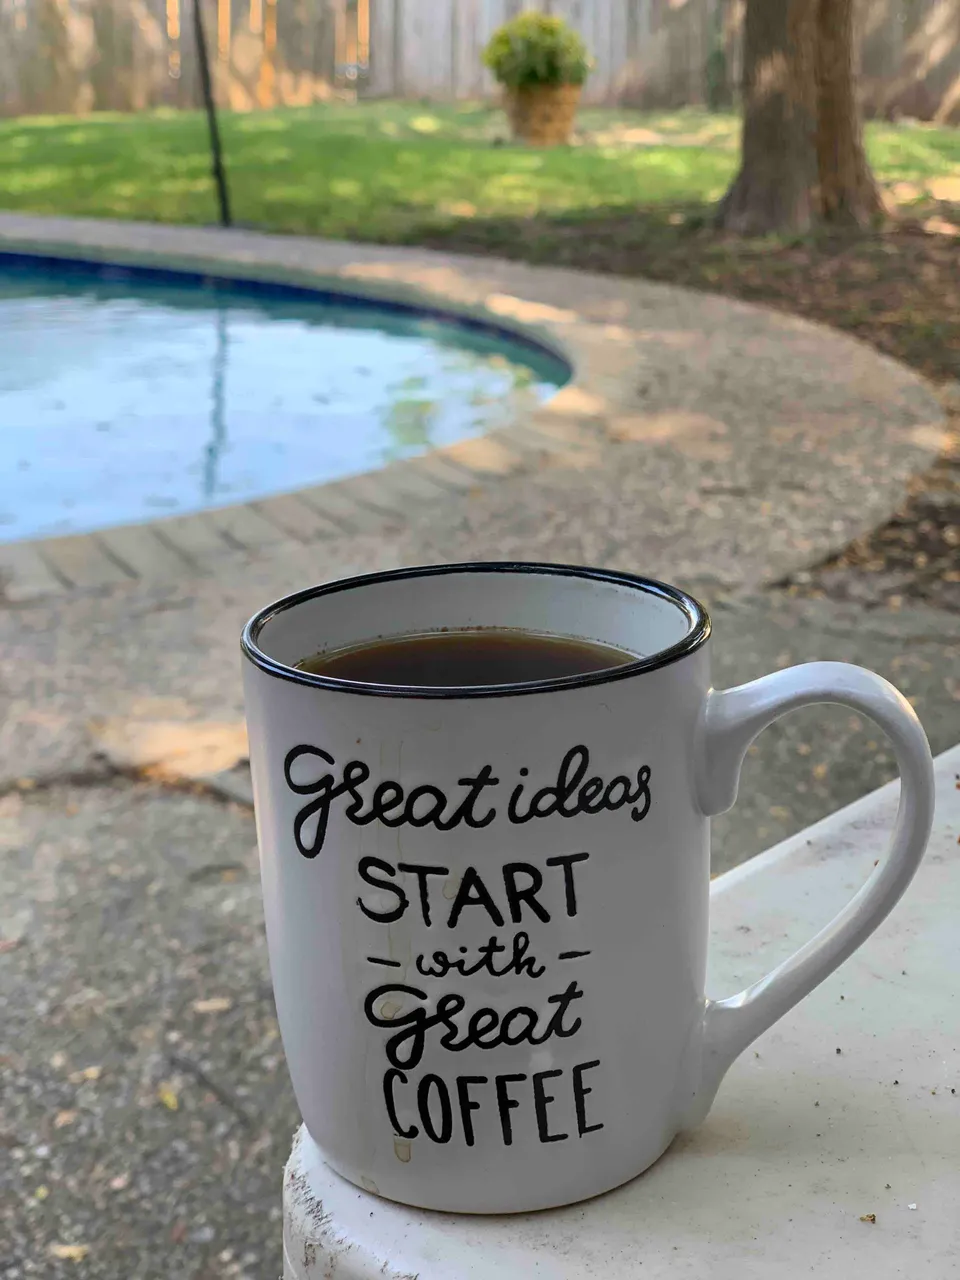 great_ideas_start_with_great_coffee.jpg